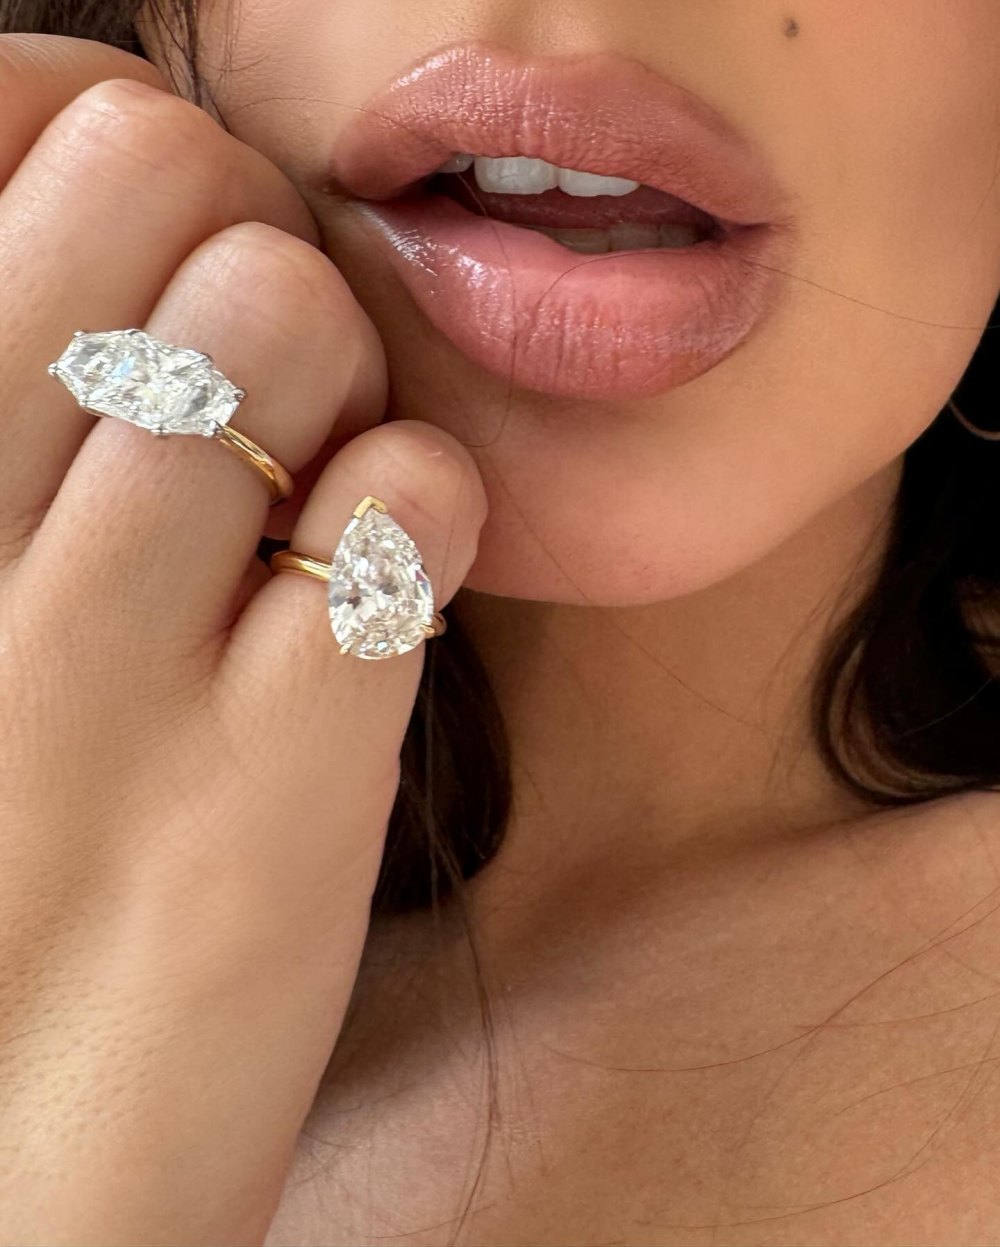 Emily Ratajkowski Transforms Engagement Ring Into 2 Divorce Rings